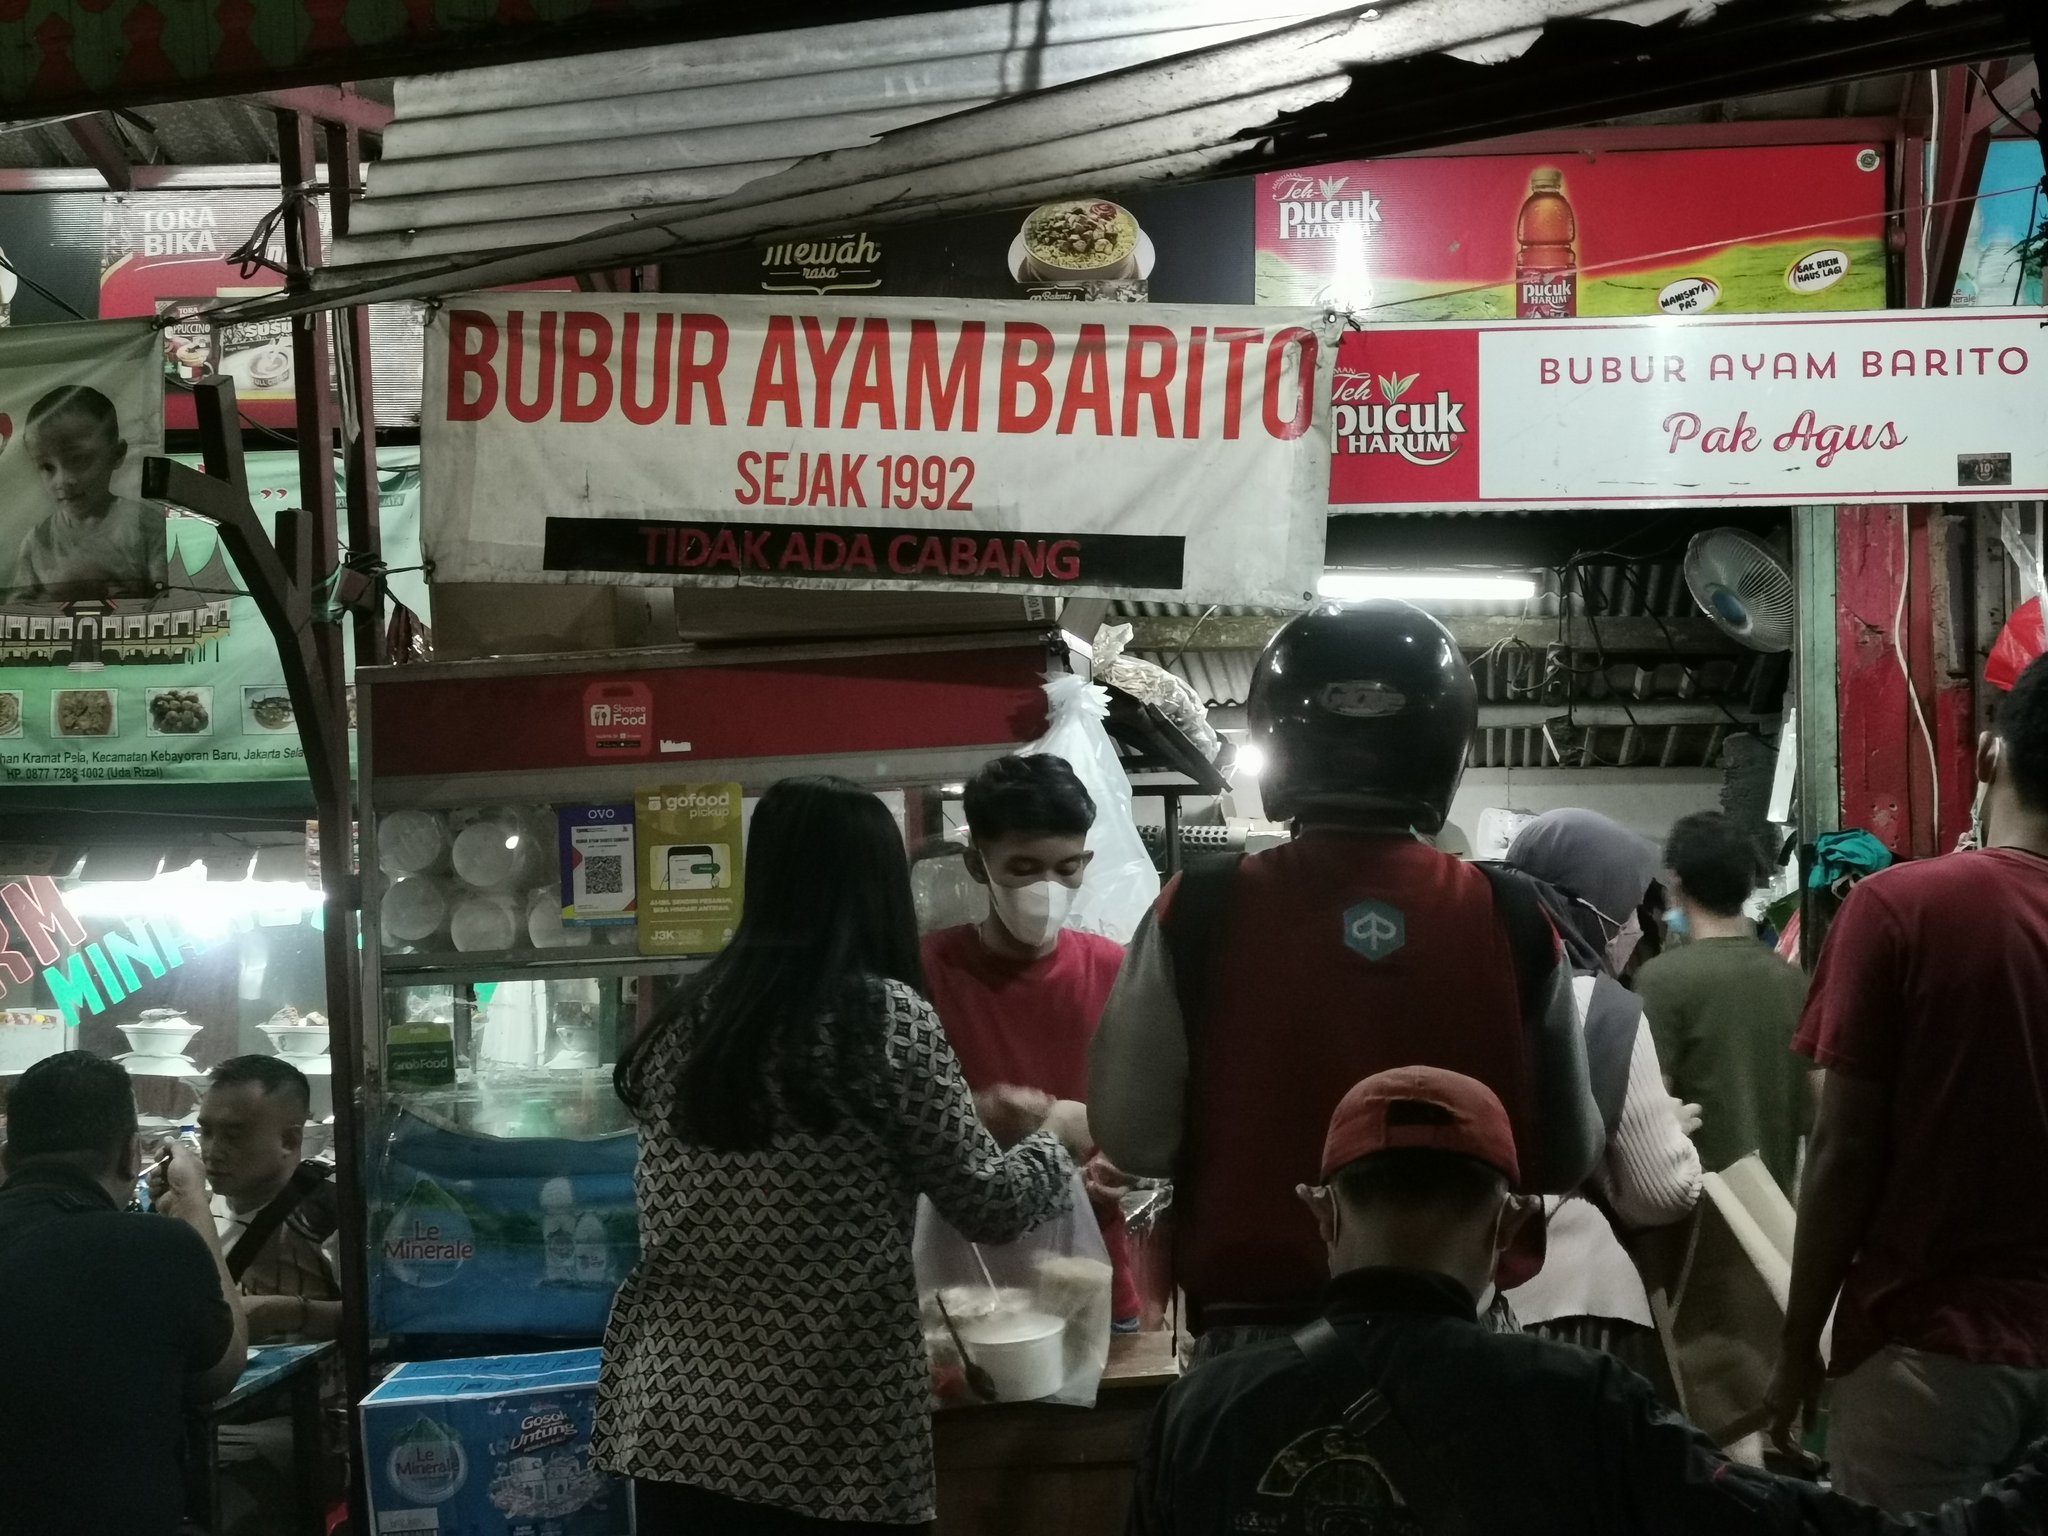 Die 20 besten Restaurants in Indonesien (lokale Wahl) | Bubur Ayam Barito